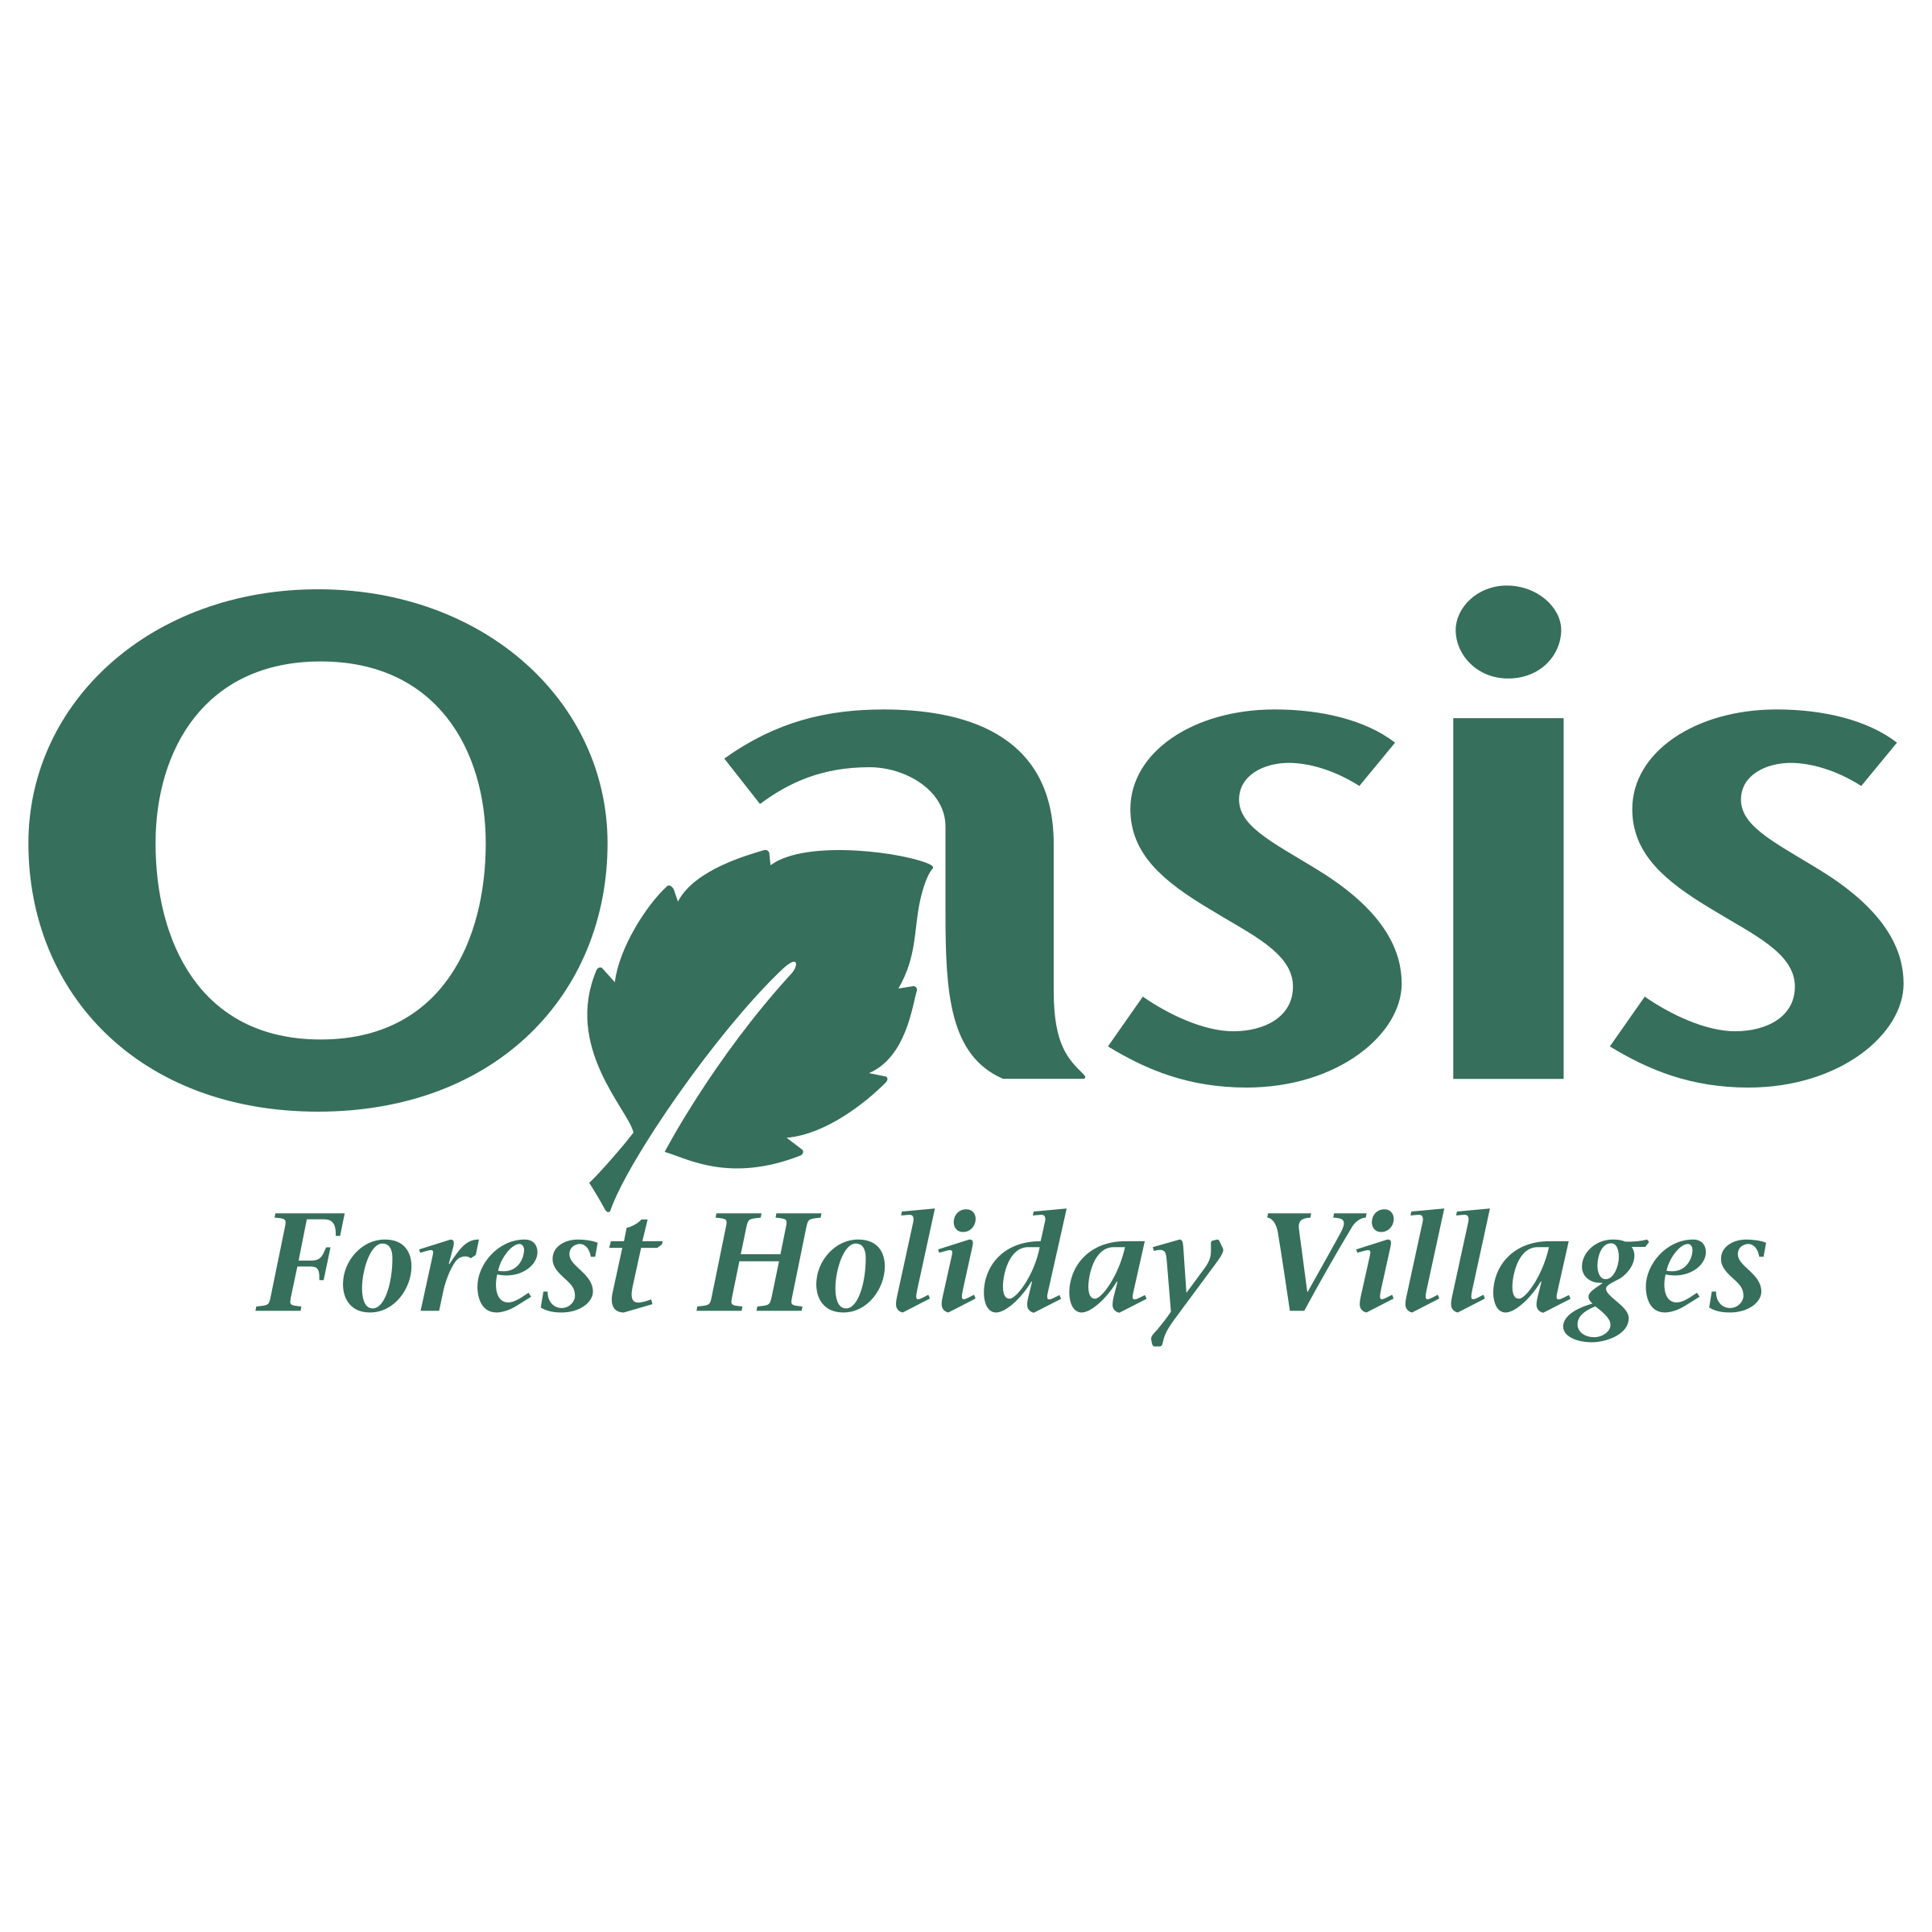 Oais Logo - Oasis Logo PNG Transparent & SVG Vector - Freebie Supply